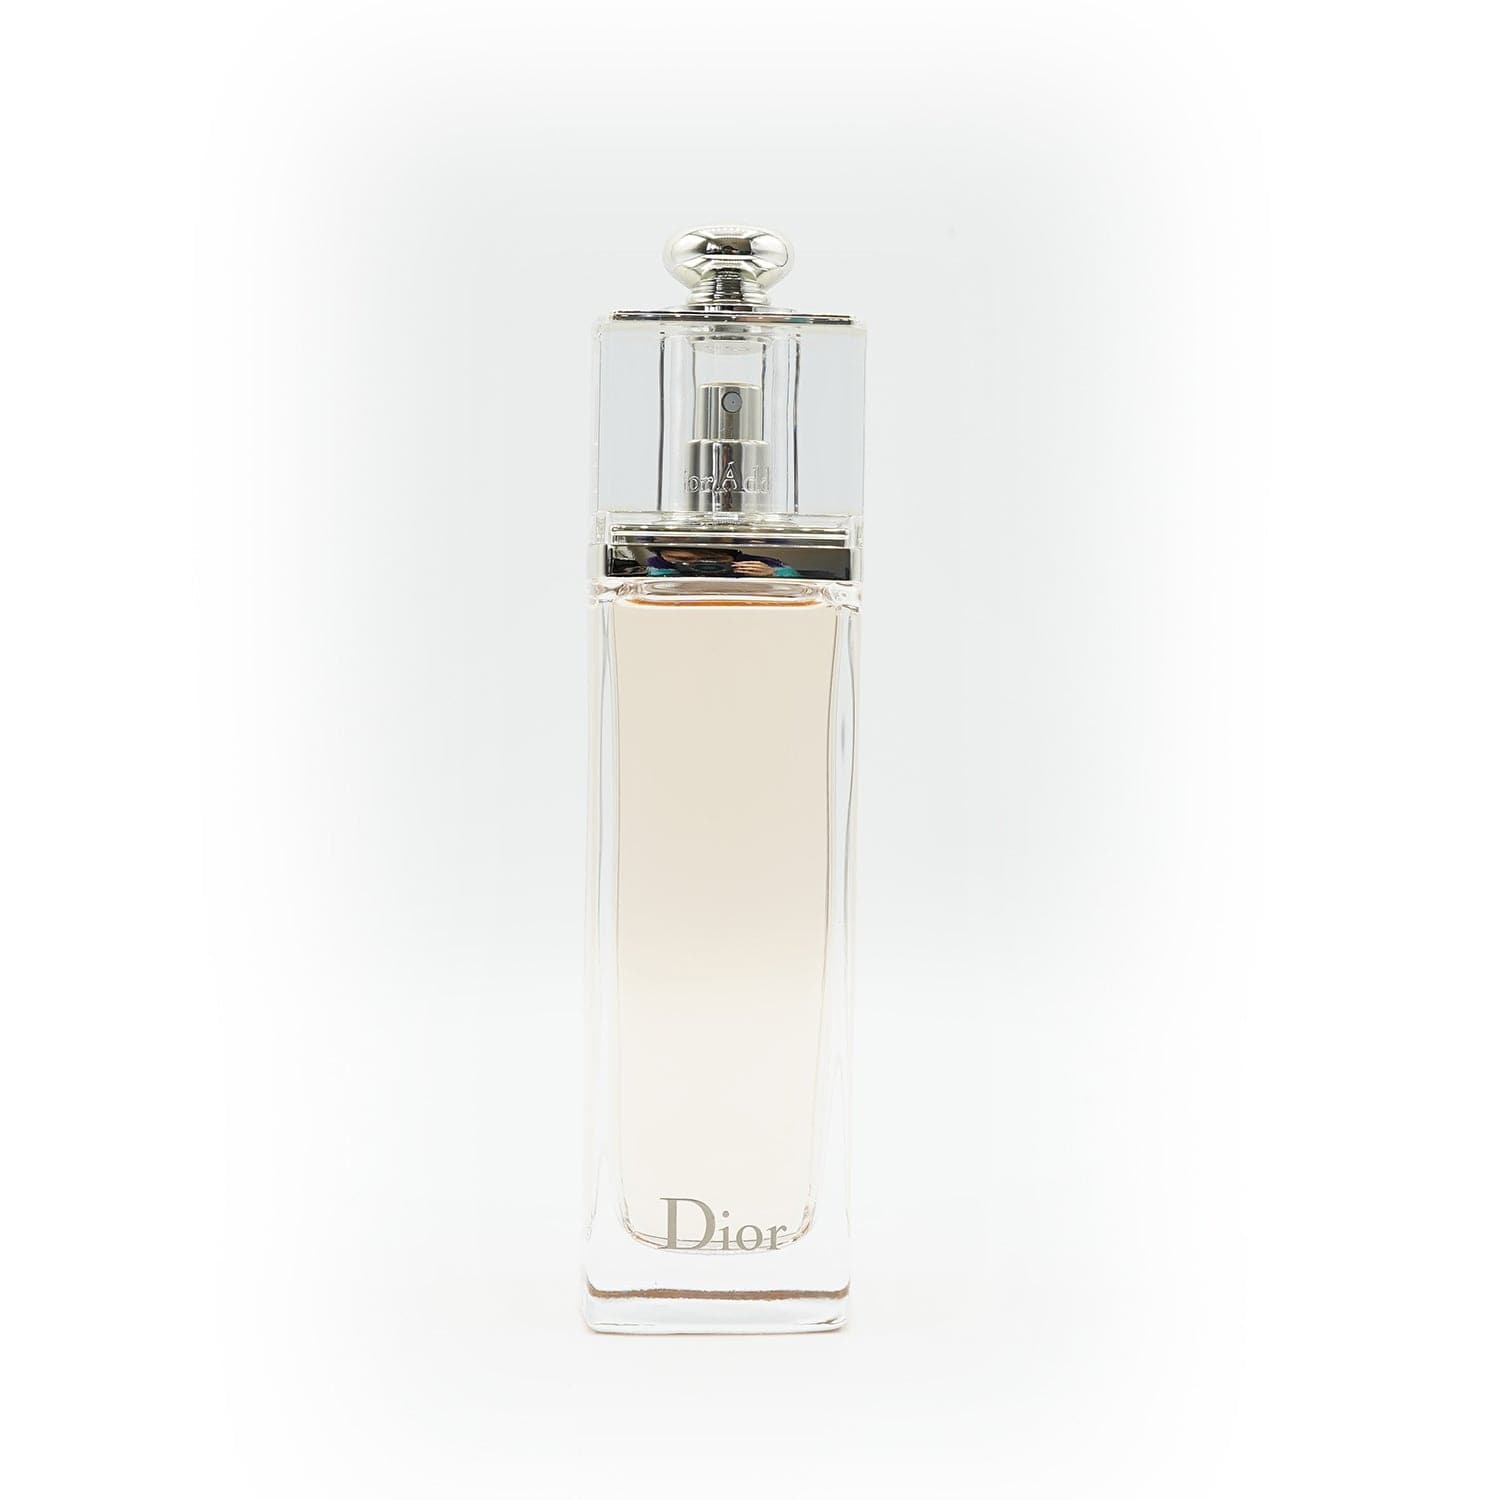 Dior | Addict Abfüllung